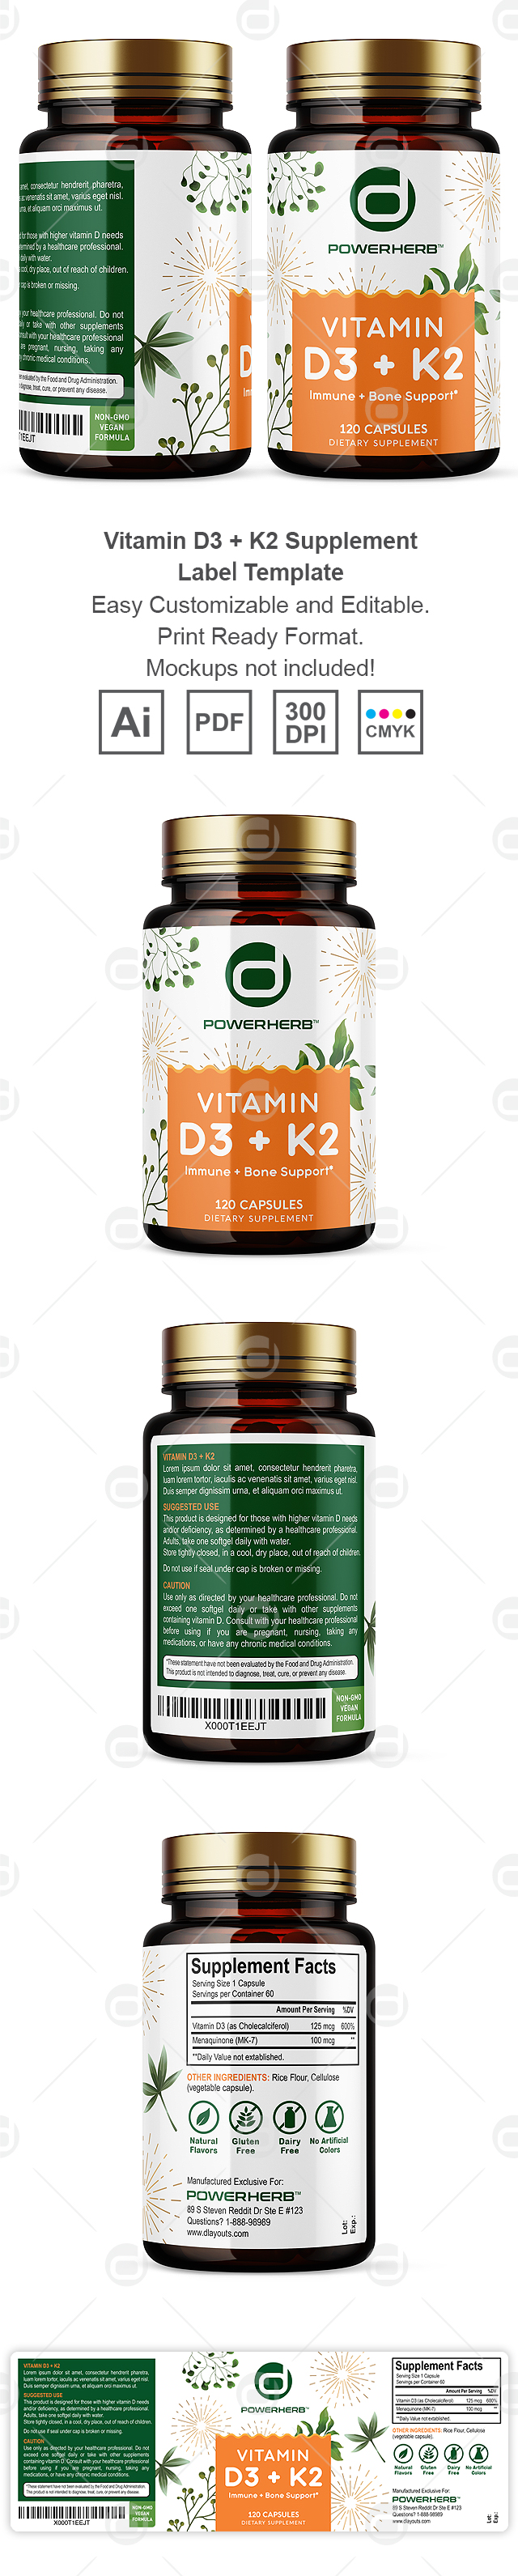 Vitamin D3 + K2 Supplement Label Template